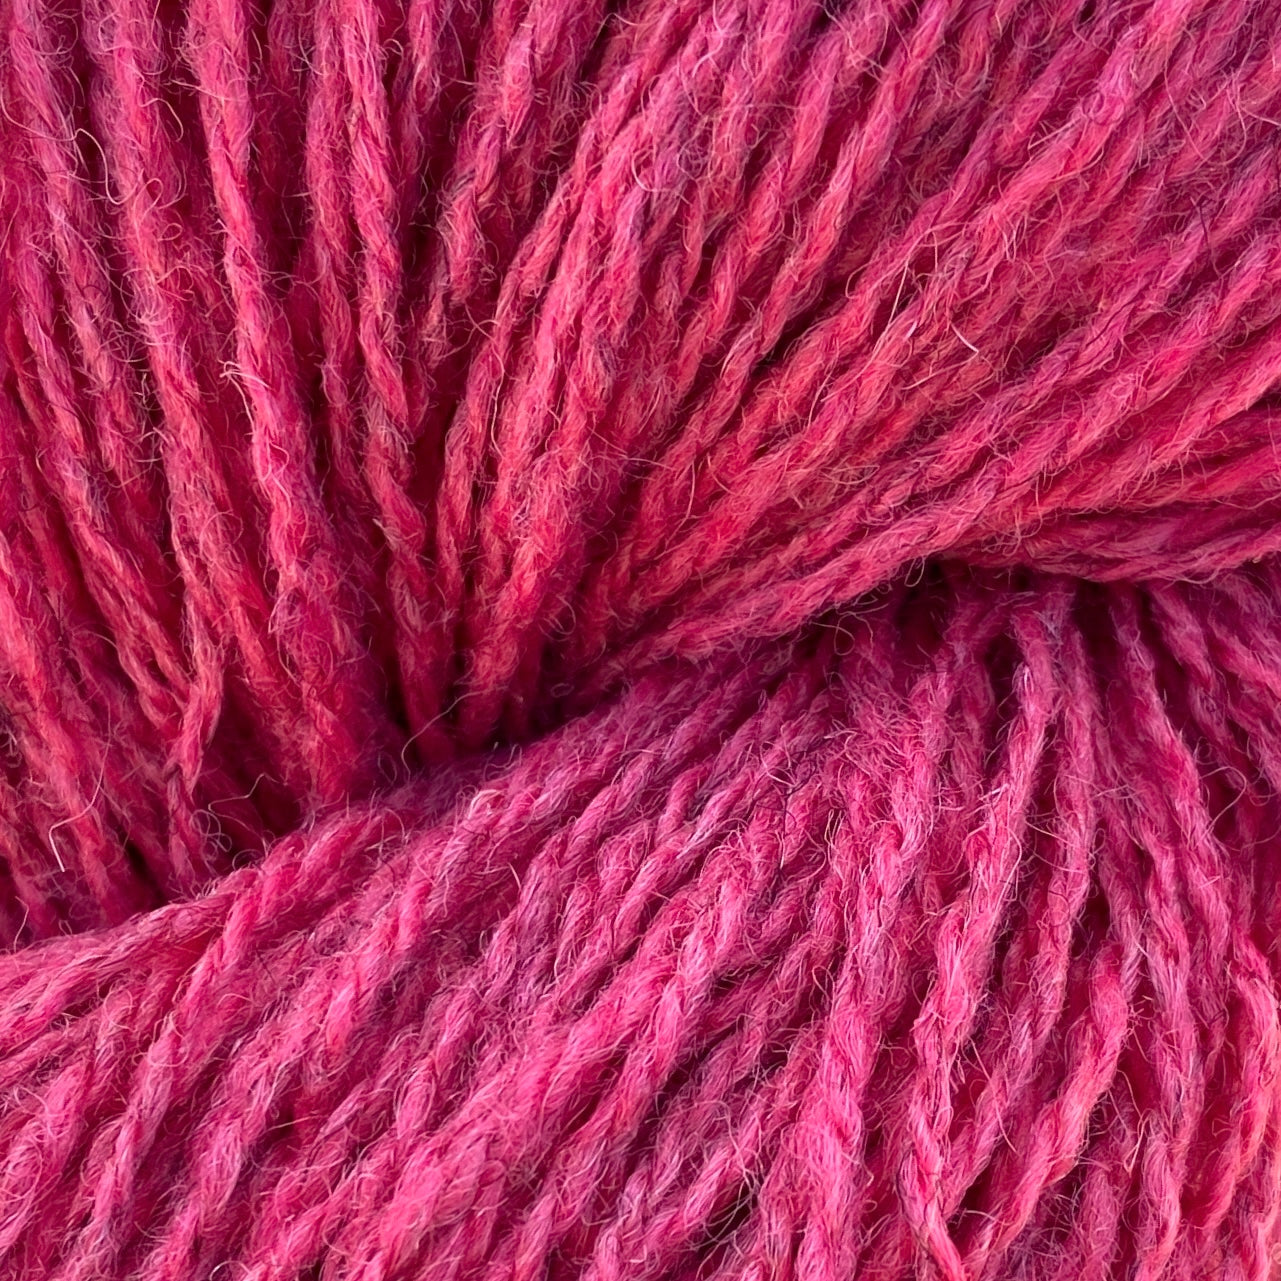 DK - Fuchsia Pink IW6